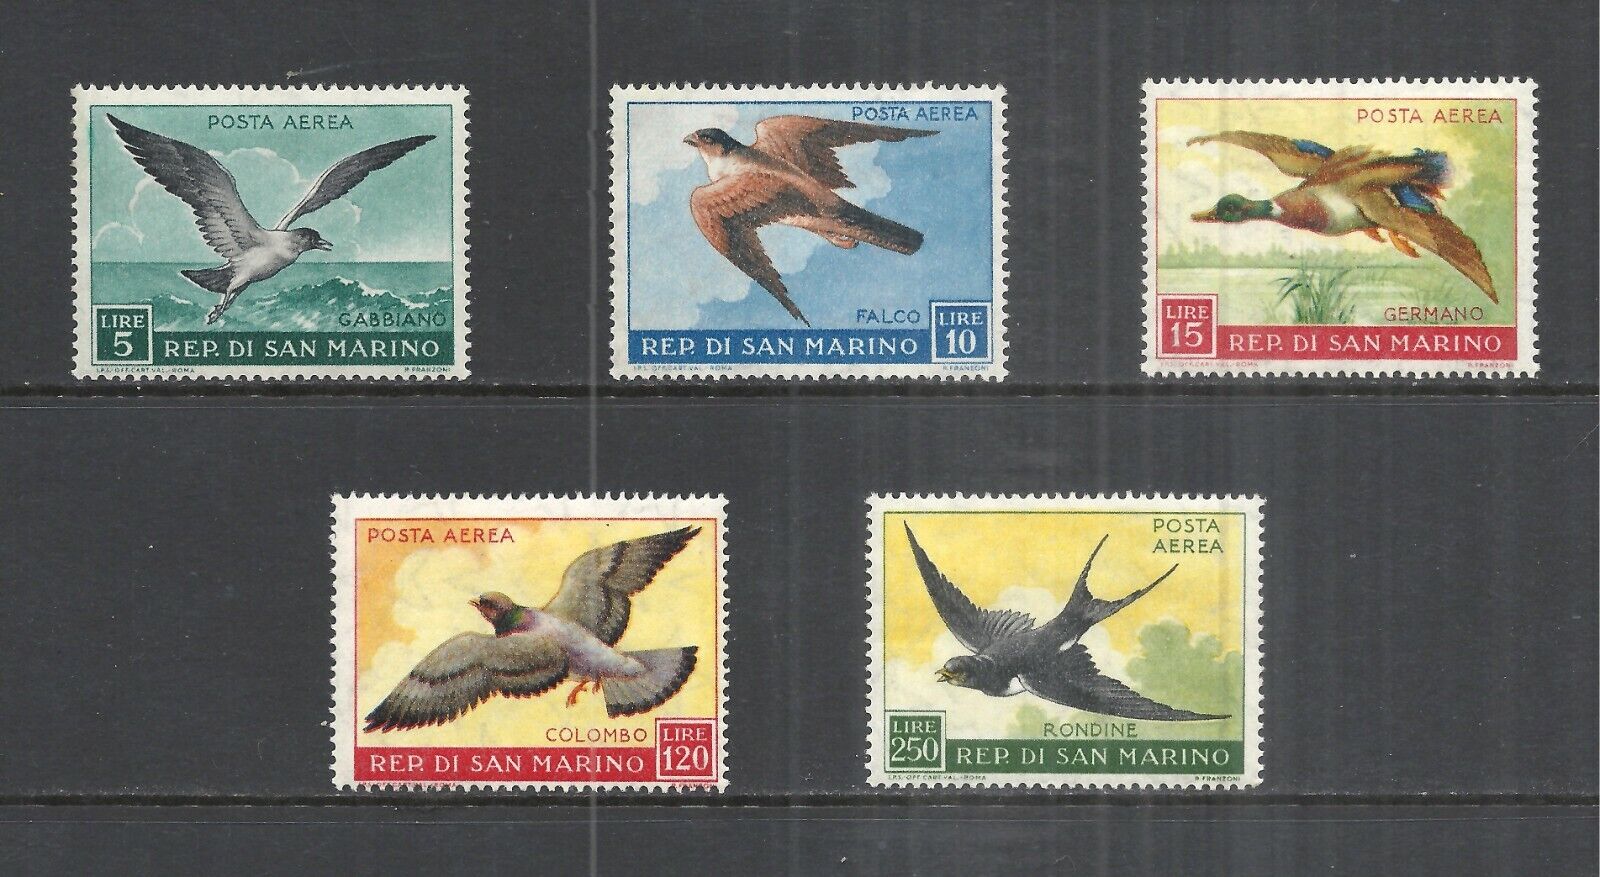 SAN MARINO SCOTT C101 - C105 MNH SET - 1959 AIRMAIL ISSUE - BIRD